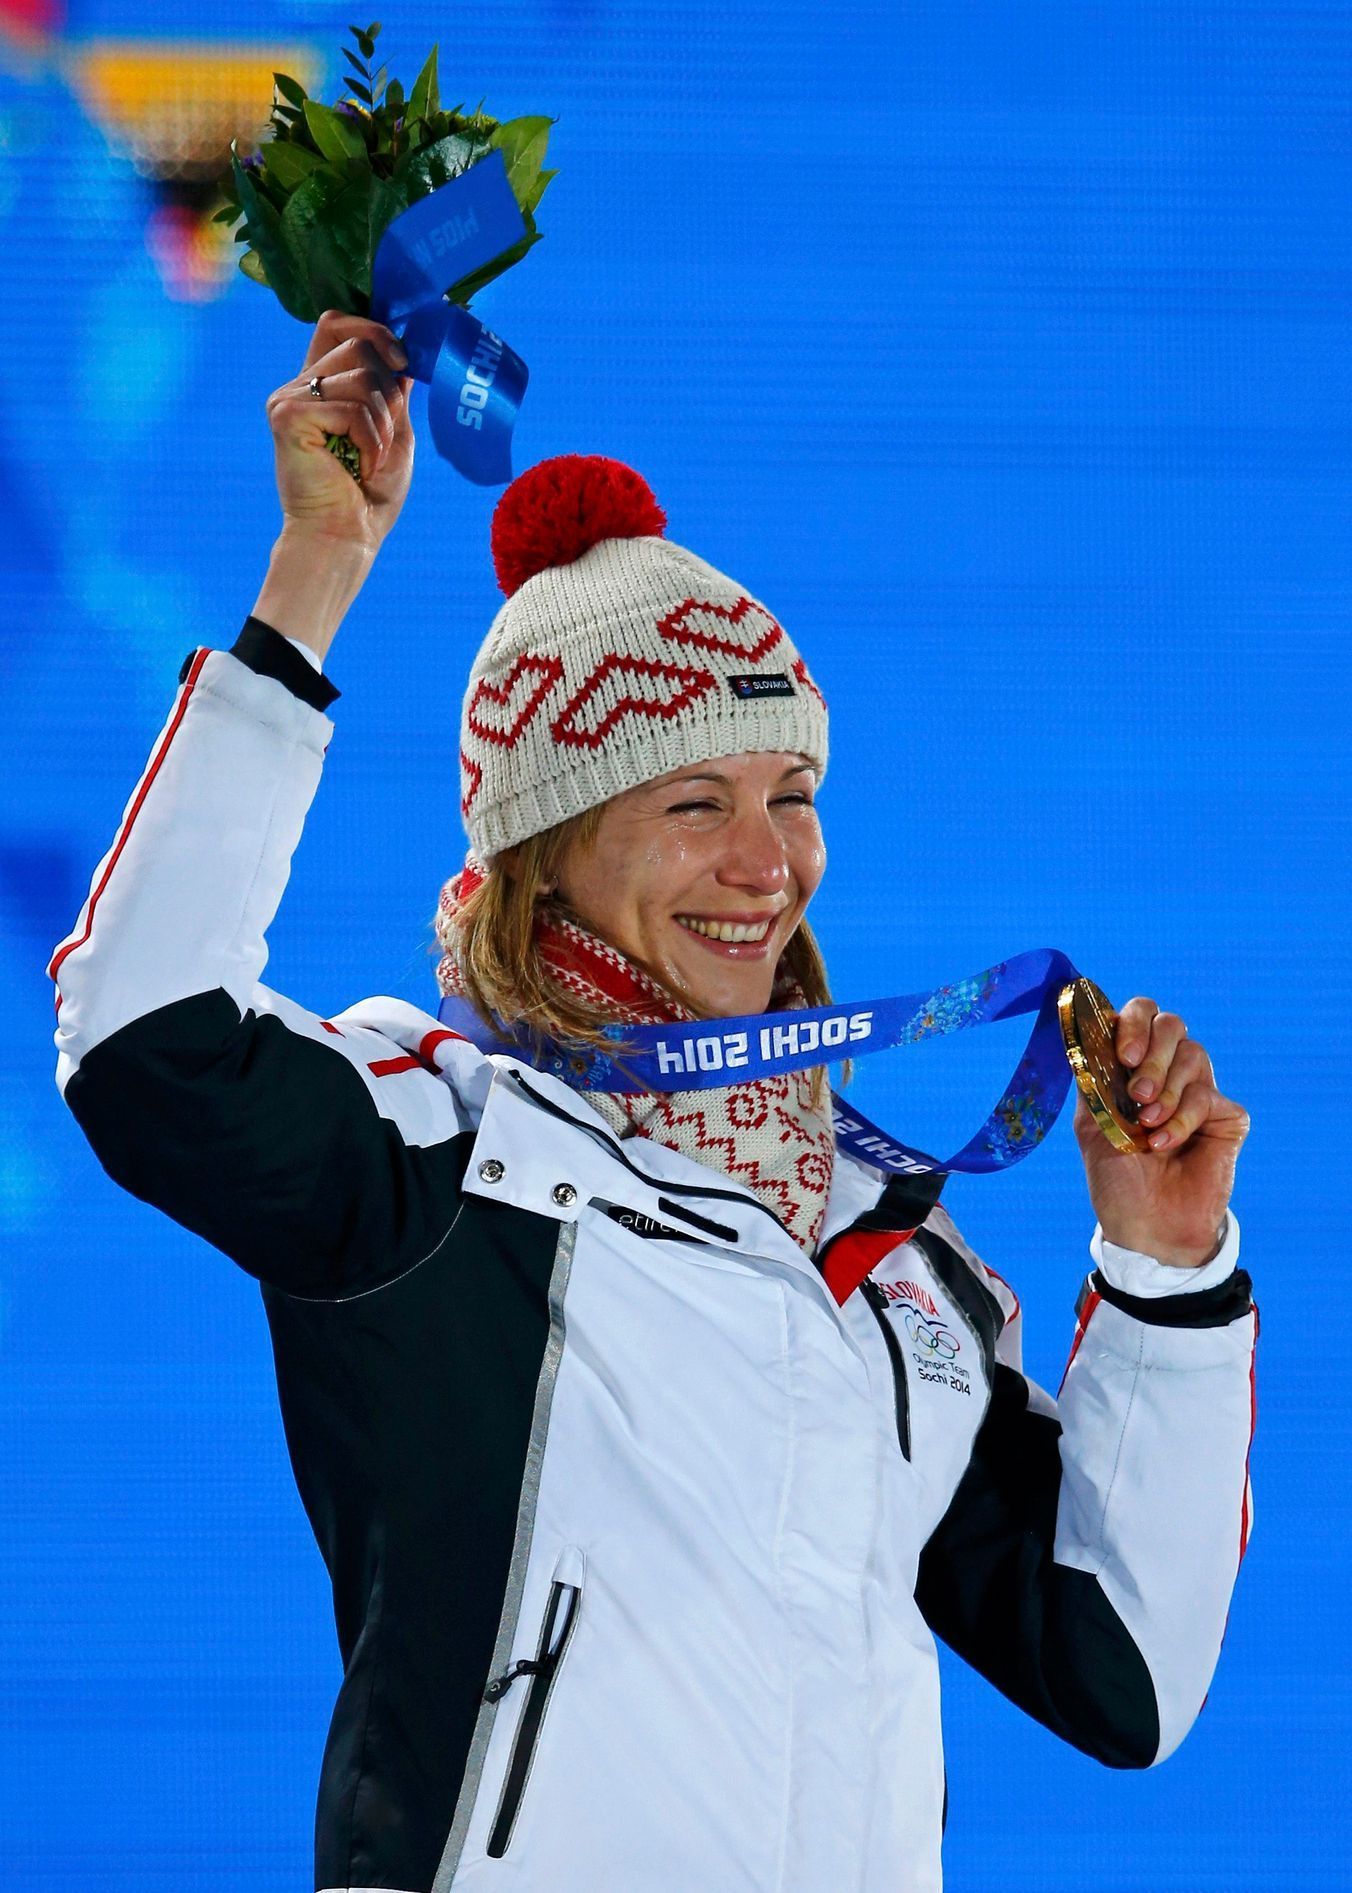 Soči 2014: Anastasia Kuzminová, (biatlon, 7.5km sprint)